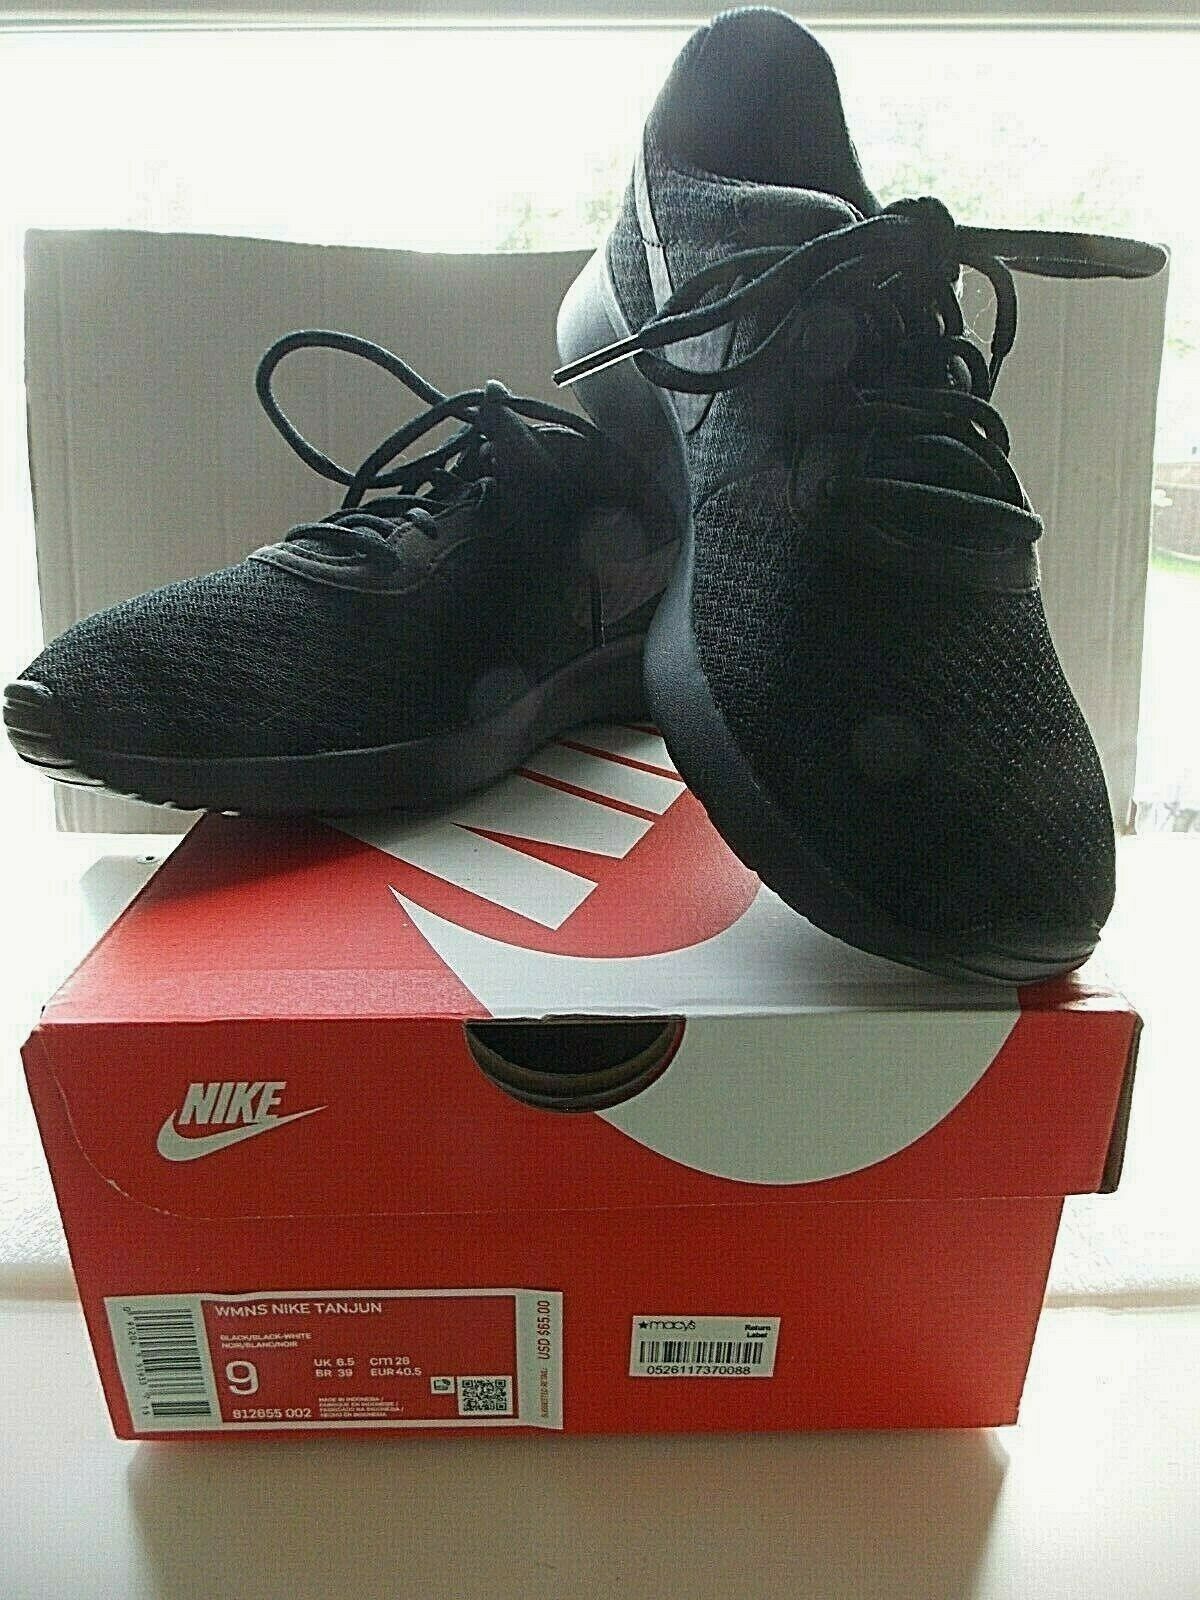 NEW Nike Tanjun Women's Size 9 Black on Black Athletic Shoes 812655 002